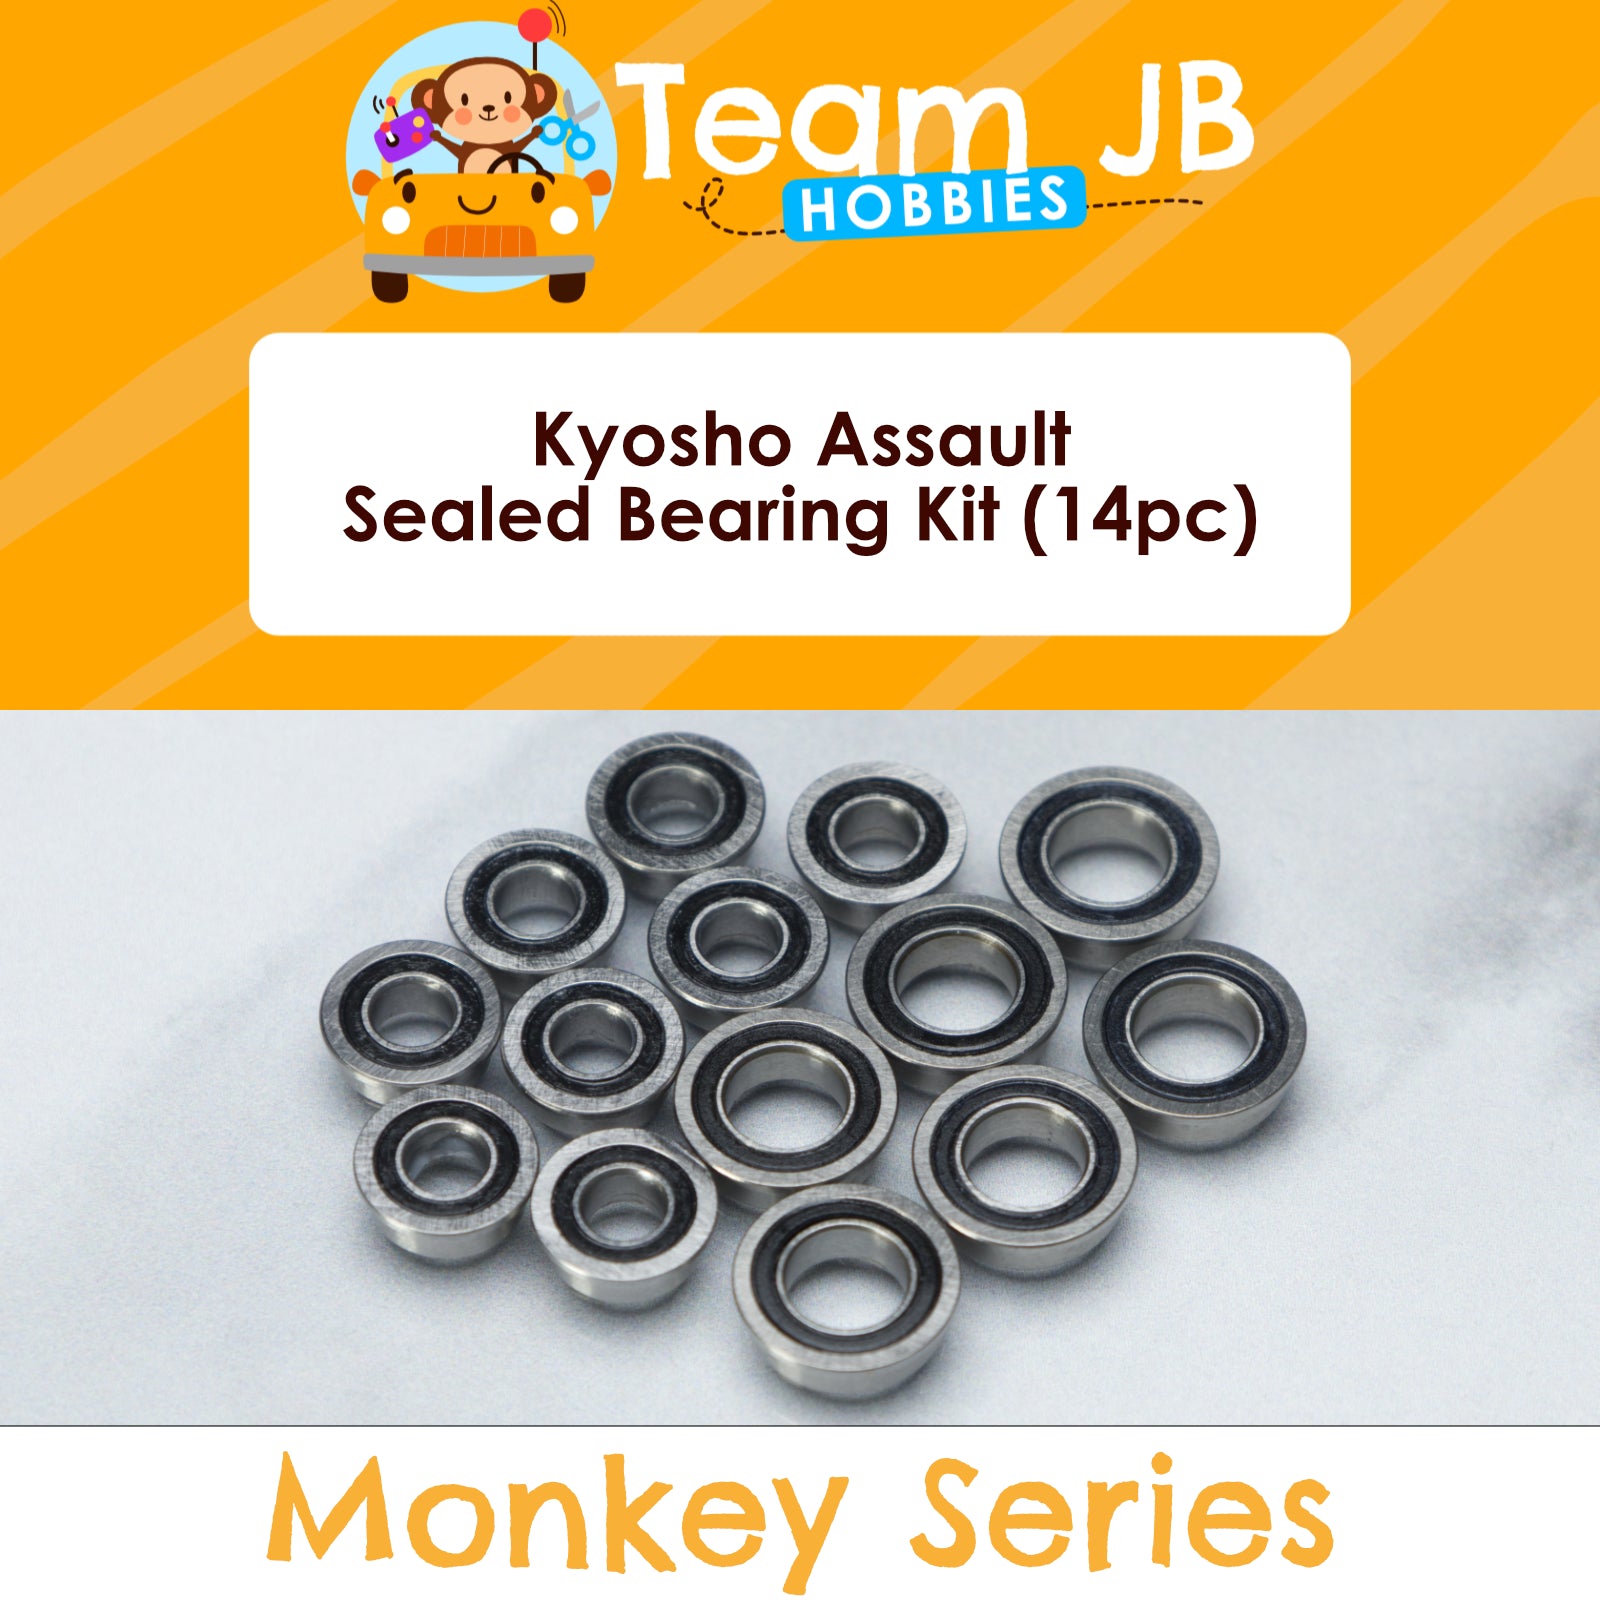 Kyosho Assault - Sealed Bearing Kit